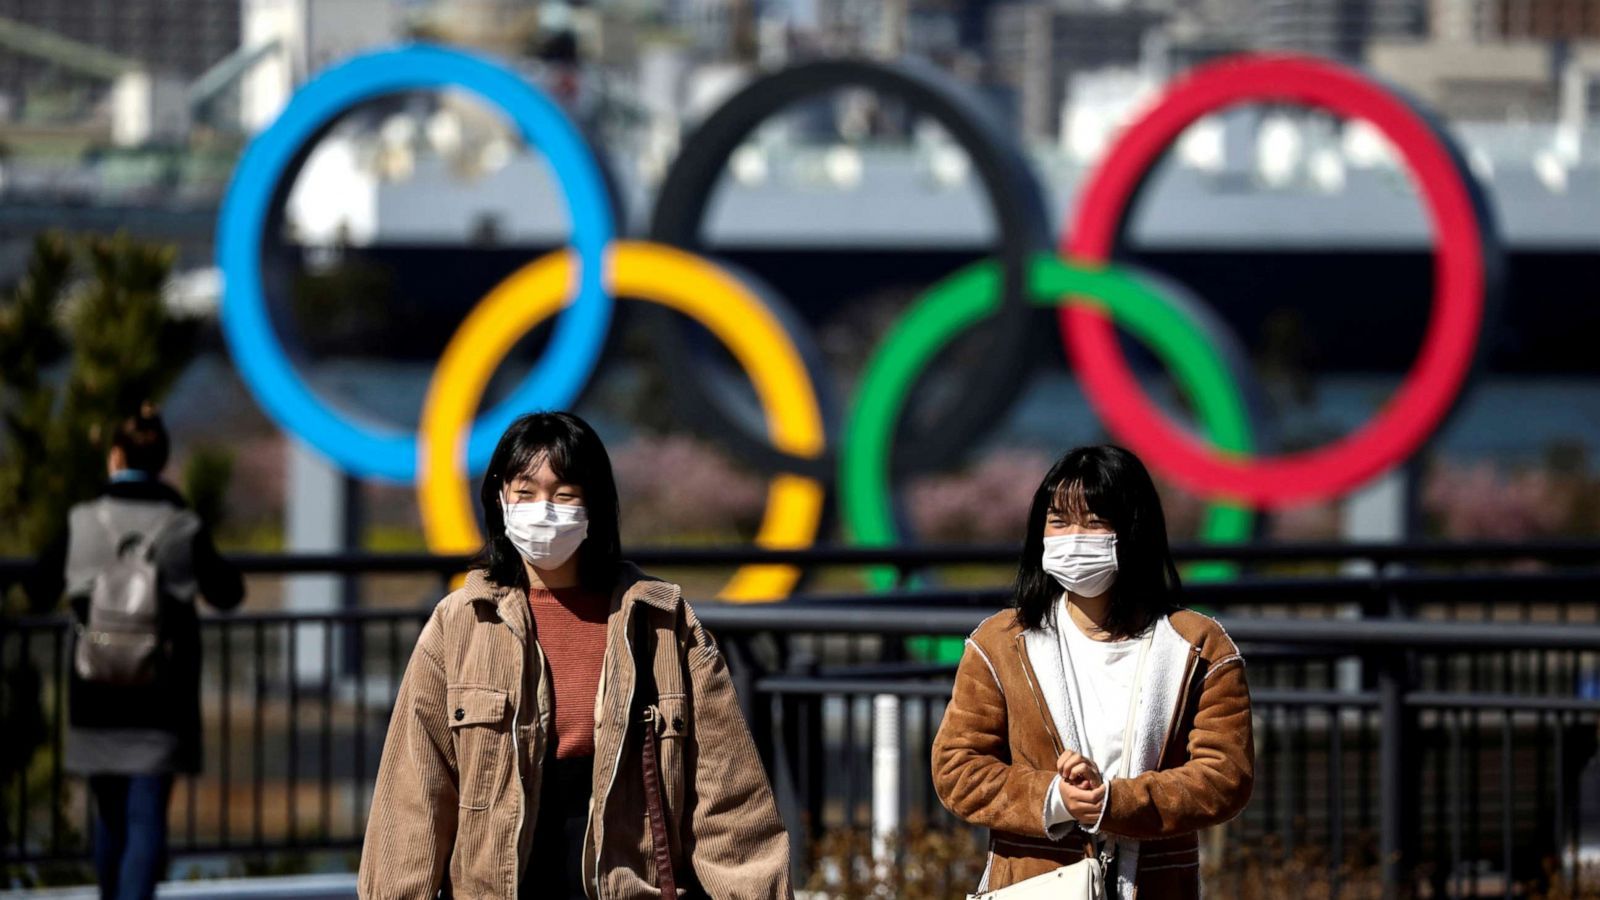 No plans to cancel or postpone Tokyo 2020 Olympics amid coronavirus outbreak, organizers say